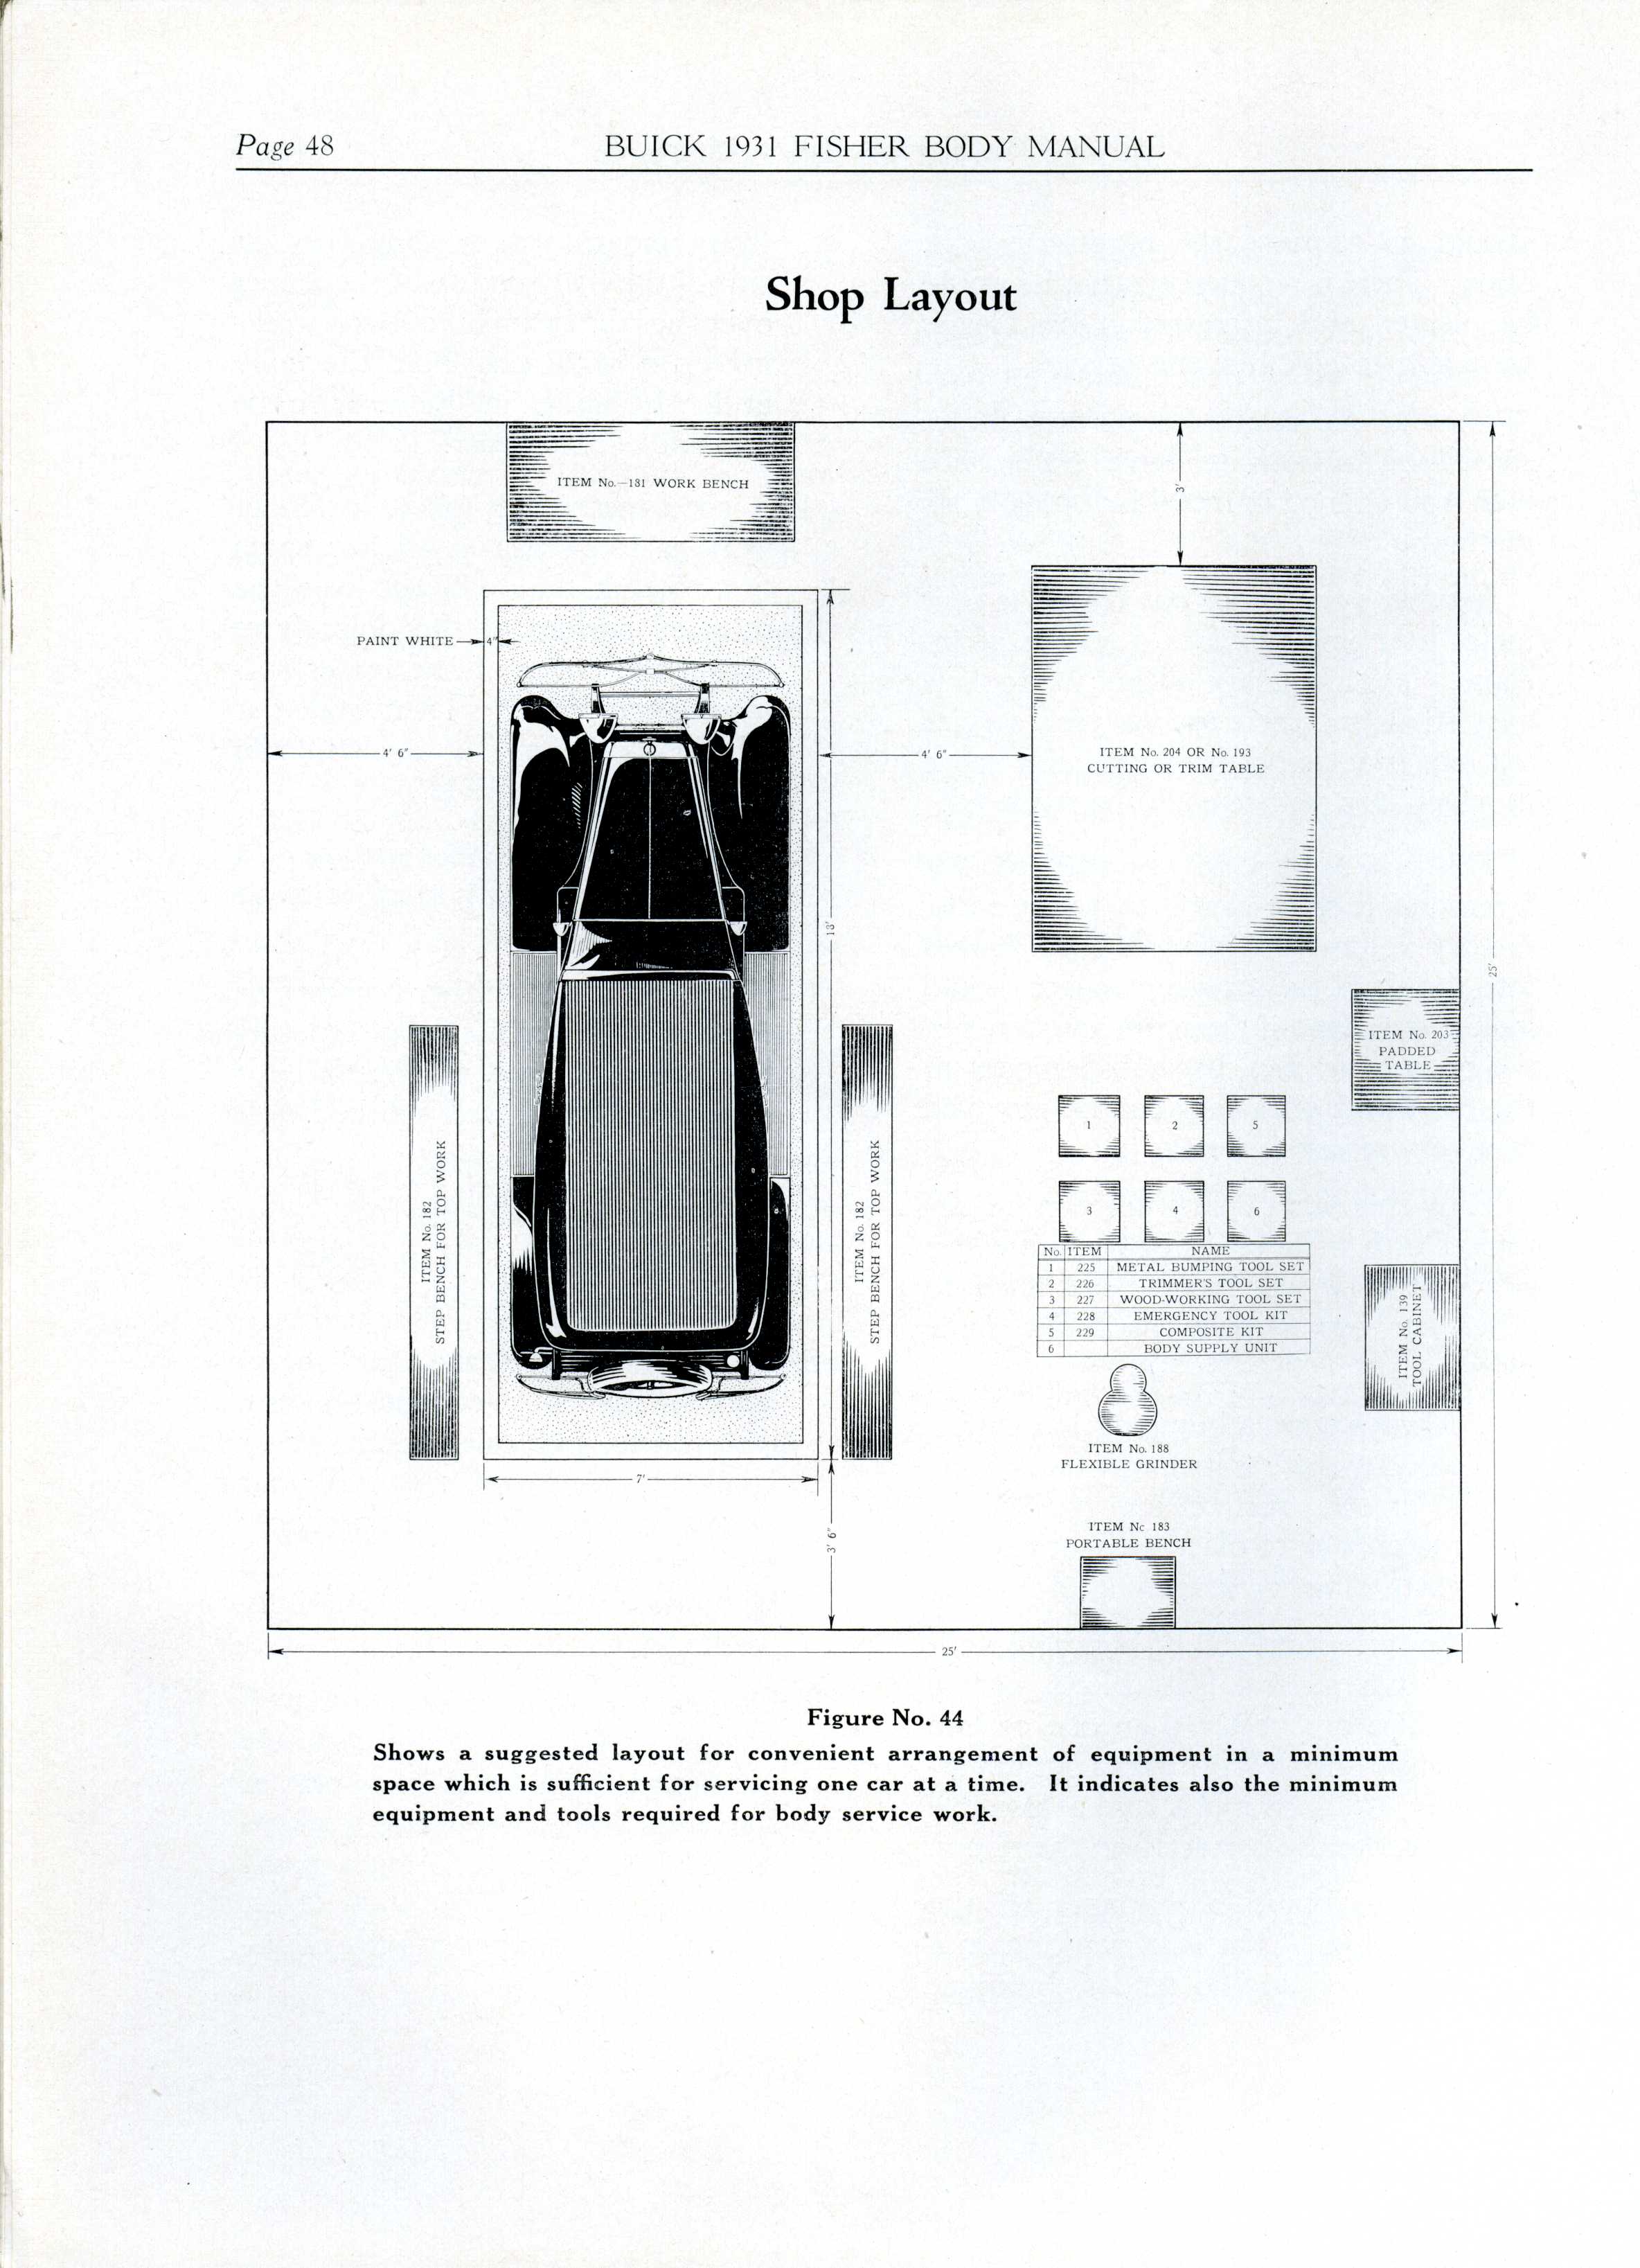 1931 Buick Fisher Body Manual-48